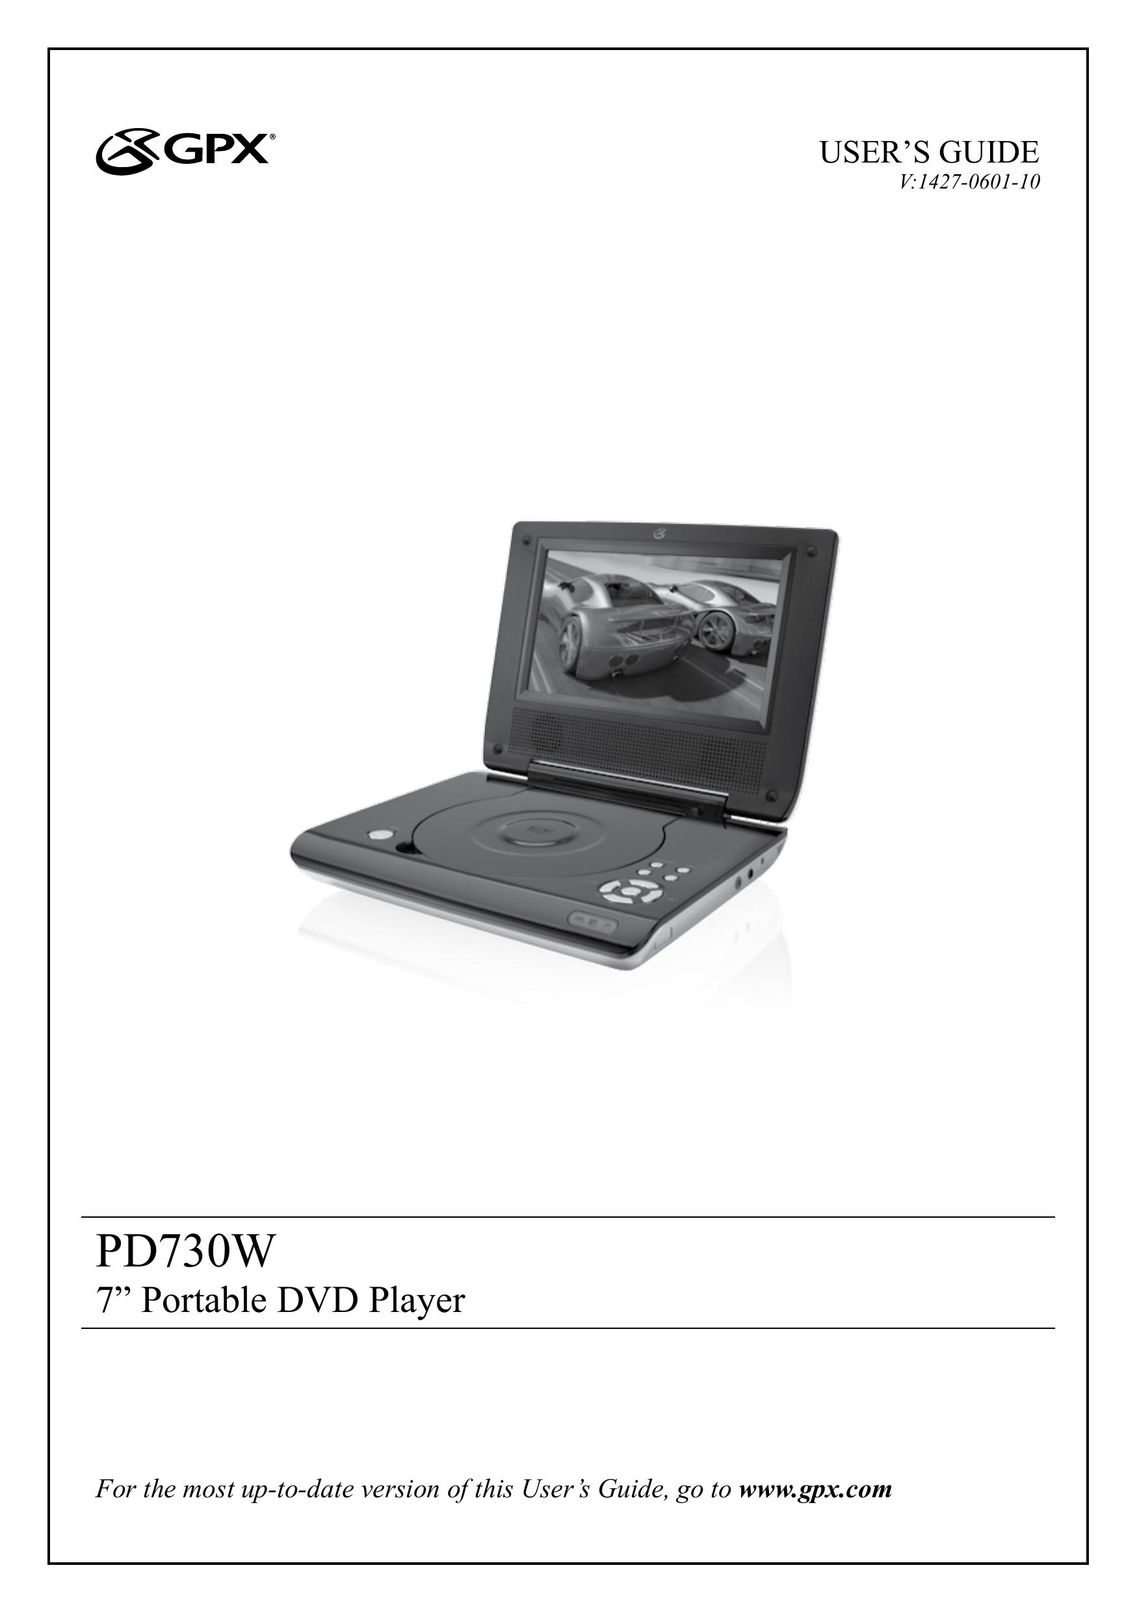 GPX PD730W Portable DVD Player User Manual